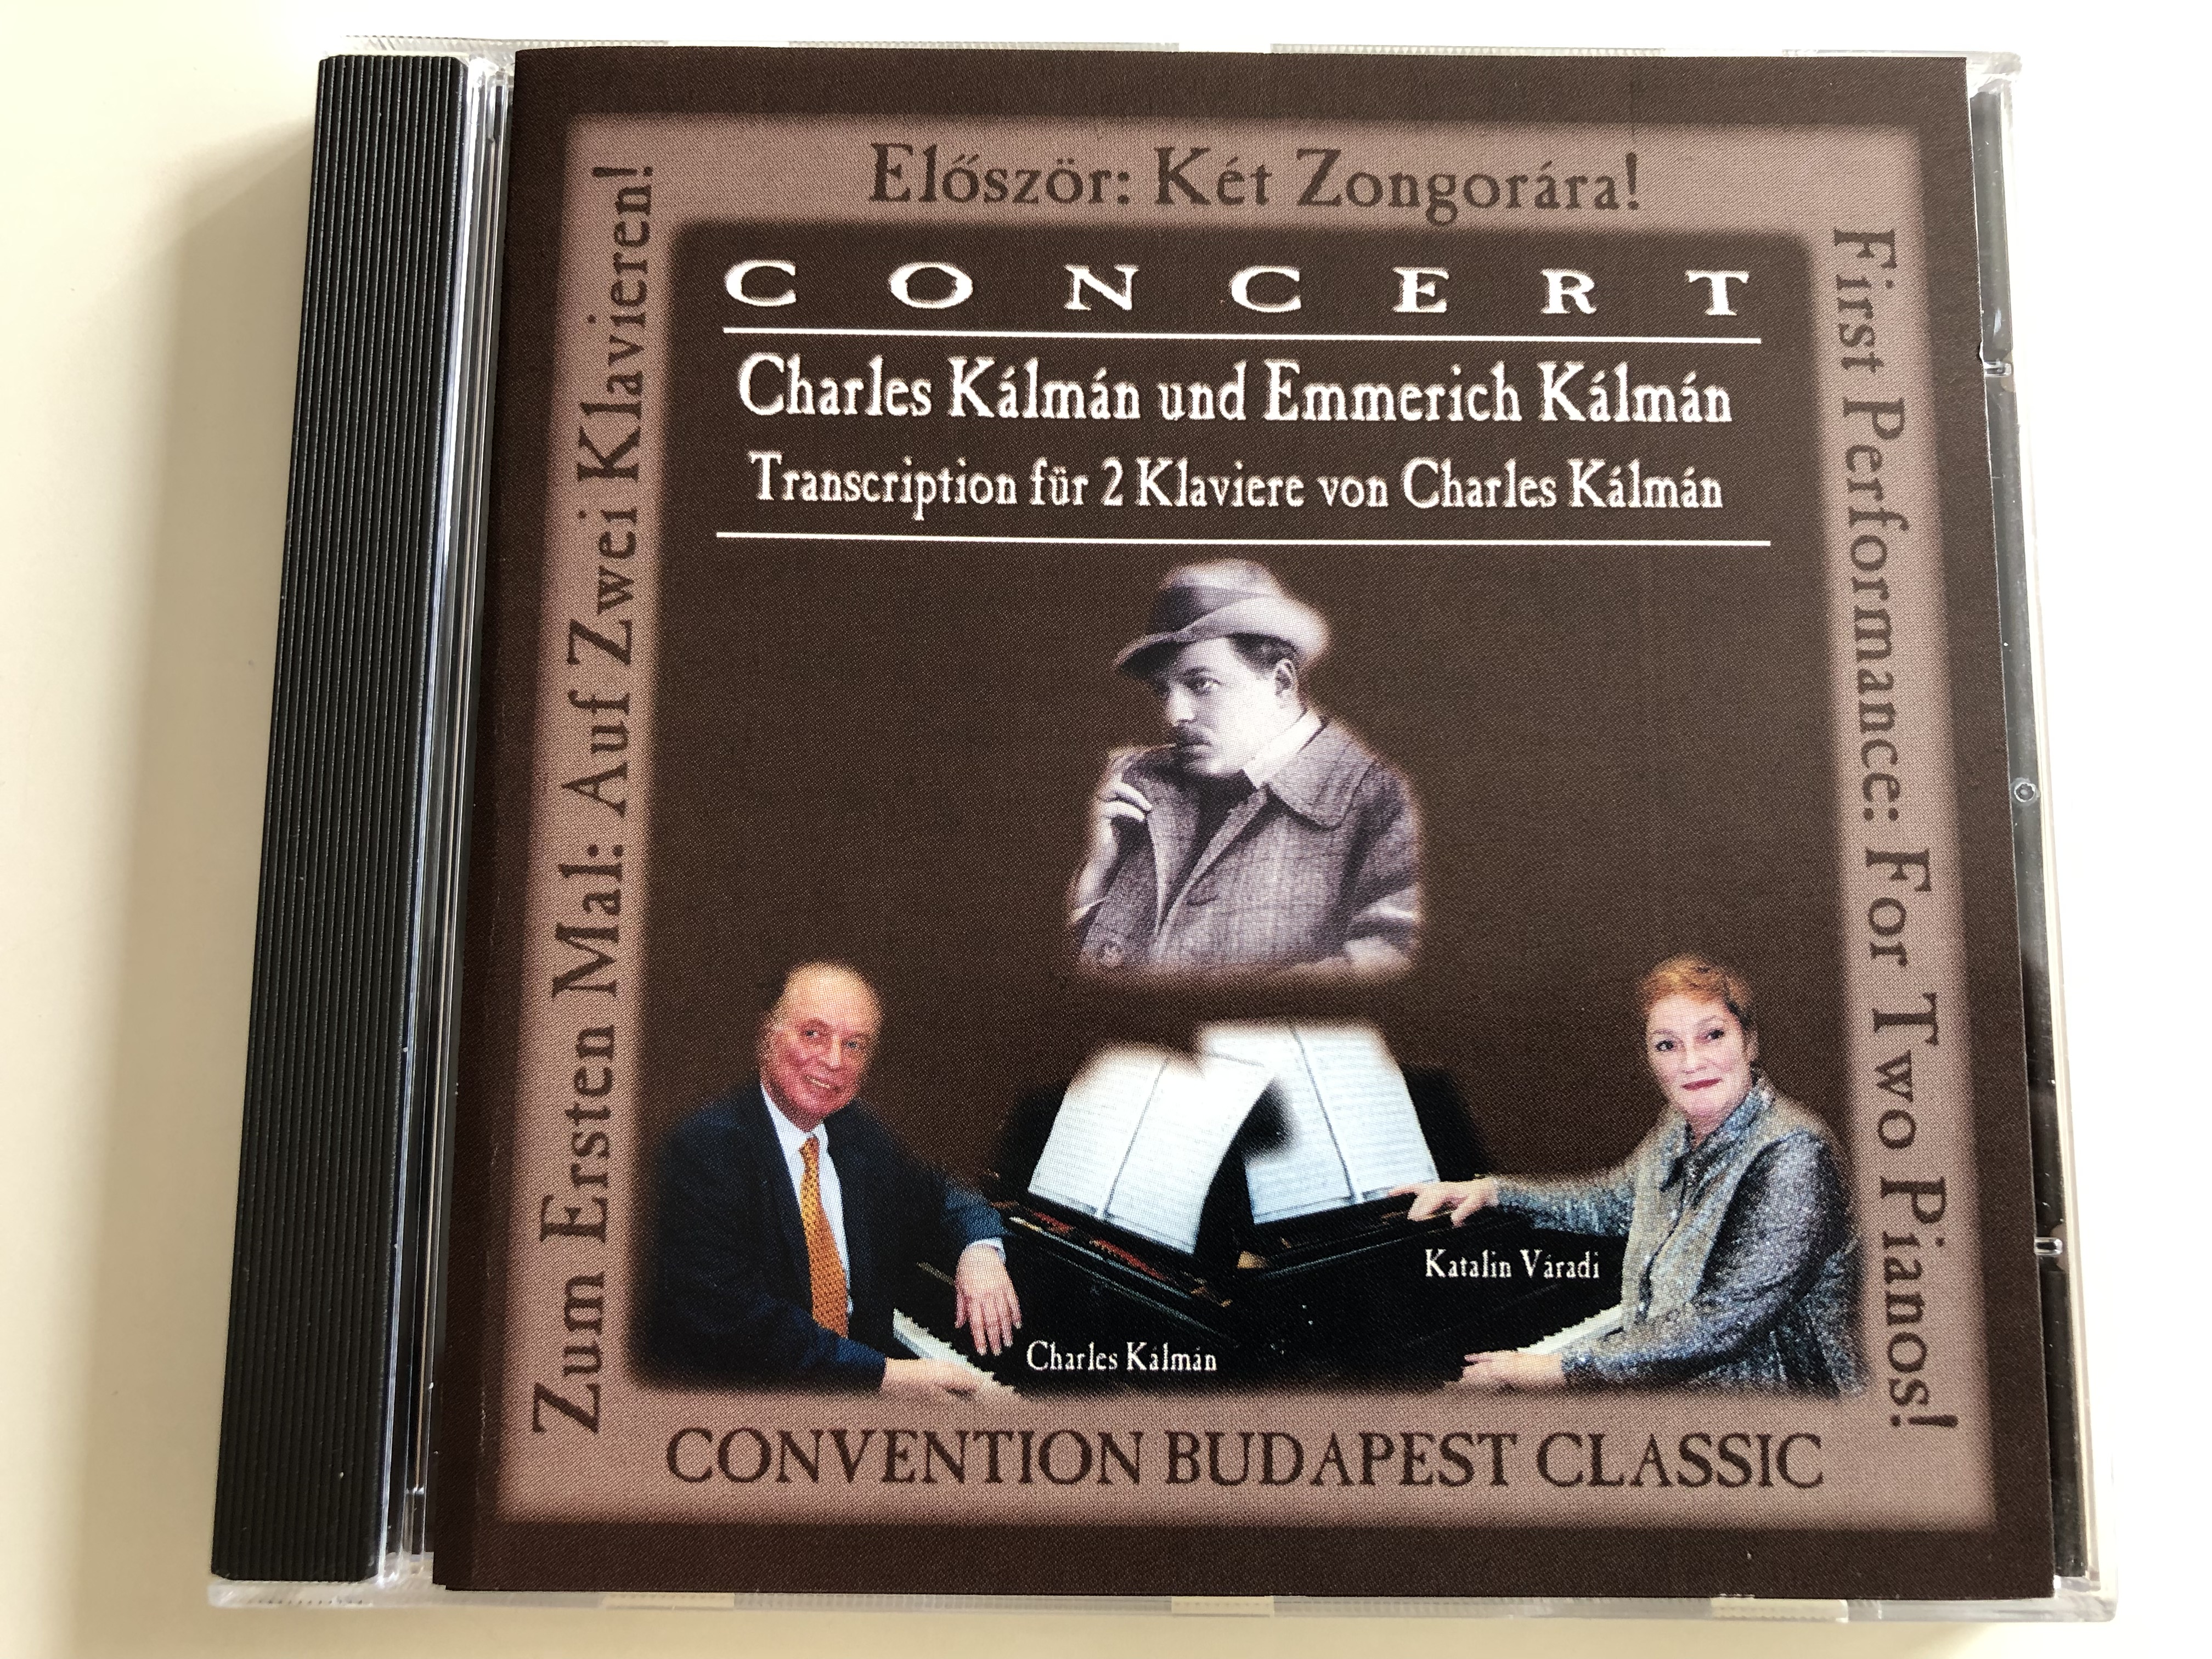 concert-charles-kalman-und-emmerich-kalman-transcription-fur-2-klaviere-von-charles-kalman-first-performance-for-two-pianos-el-sz-r-ket-zongorara-convention-budapest-classic-audio-cd-cbp-0-1-.jpg